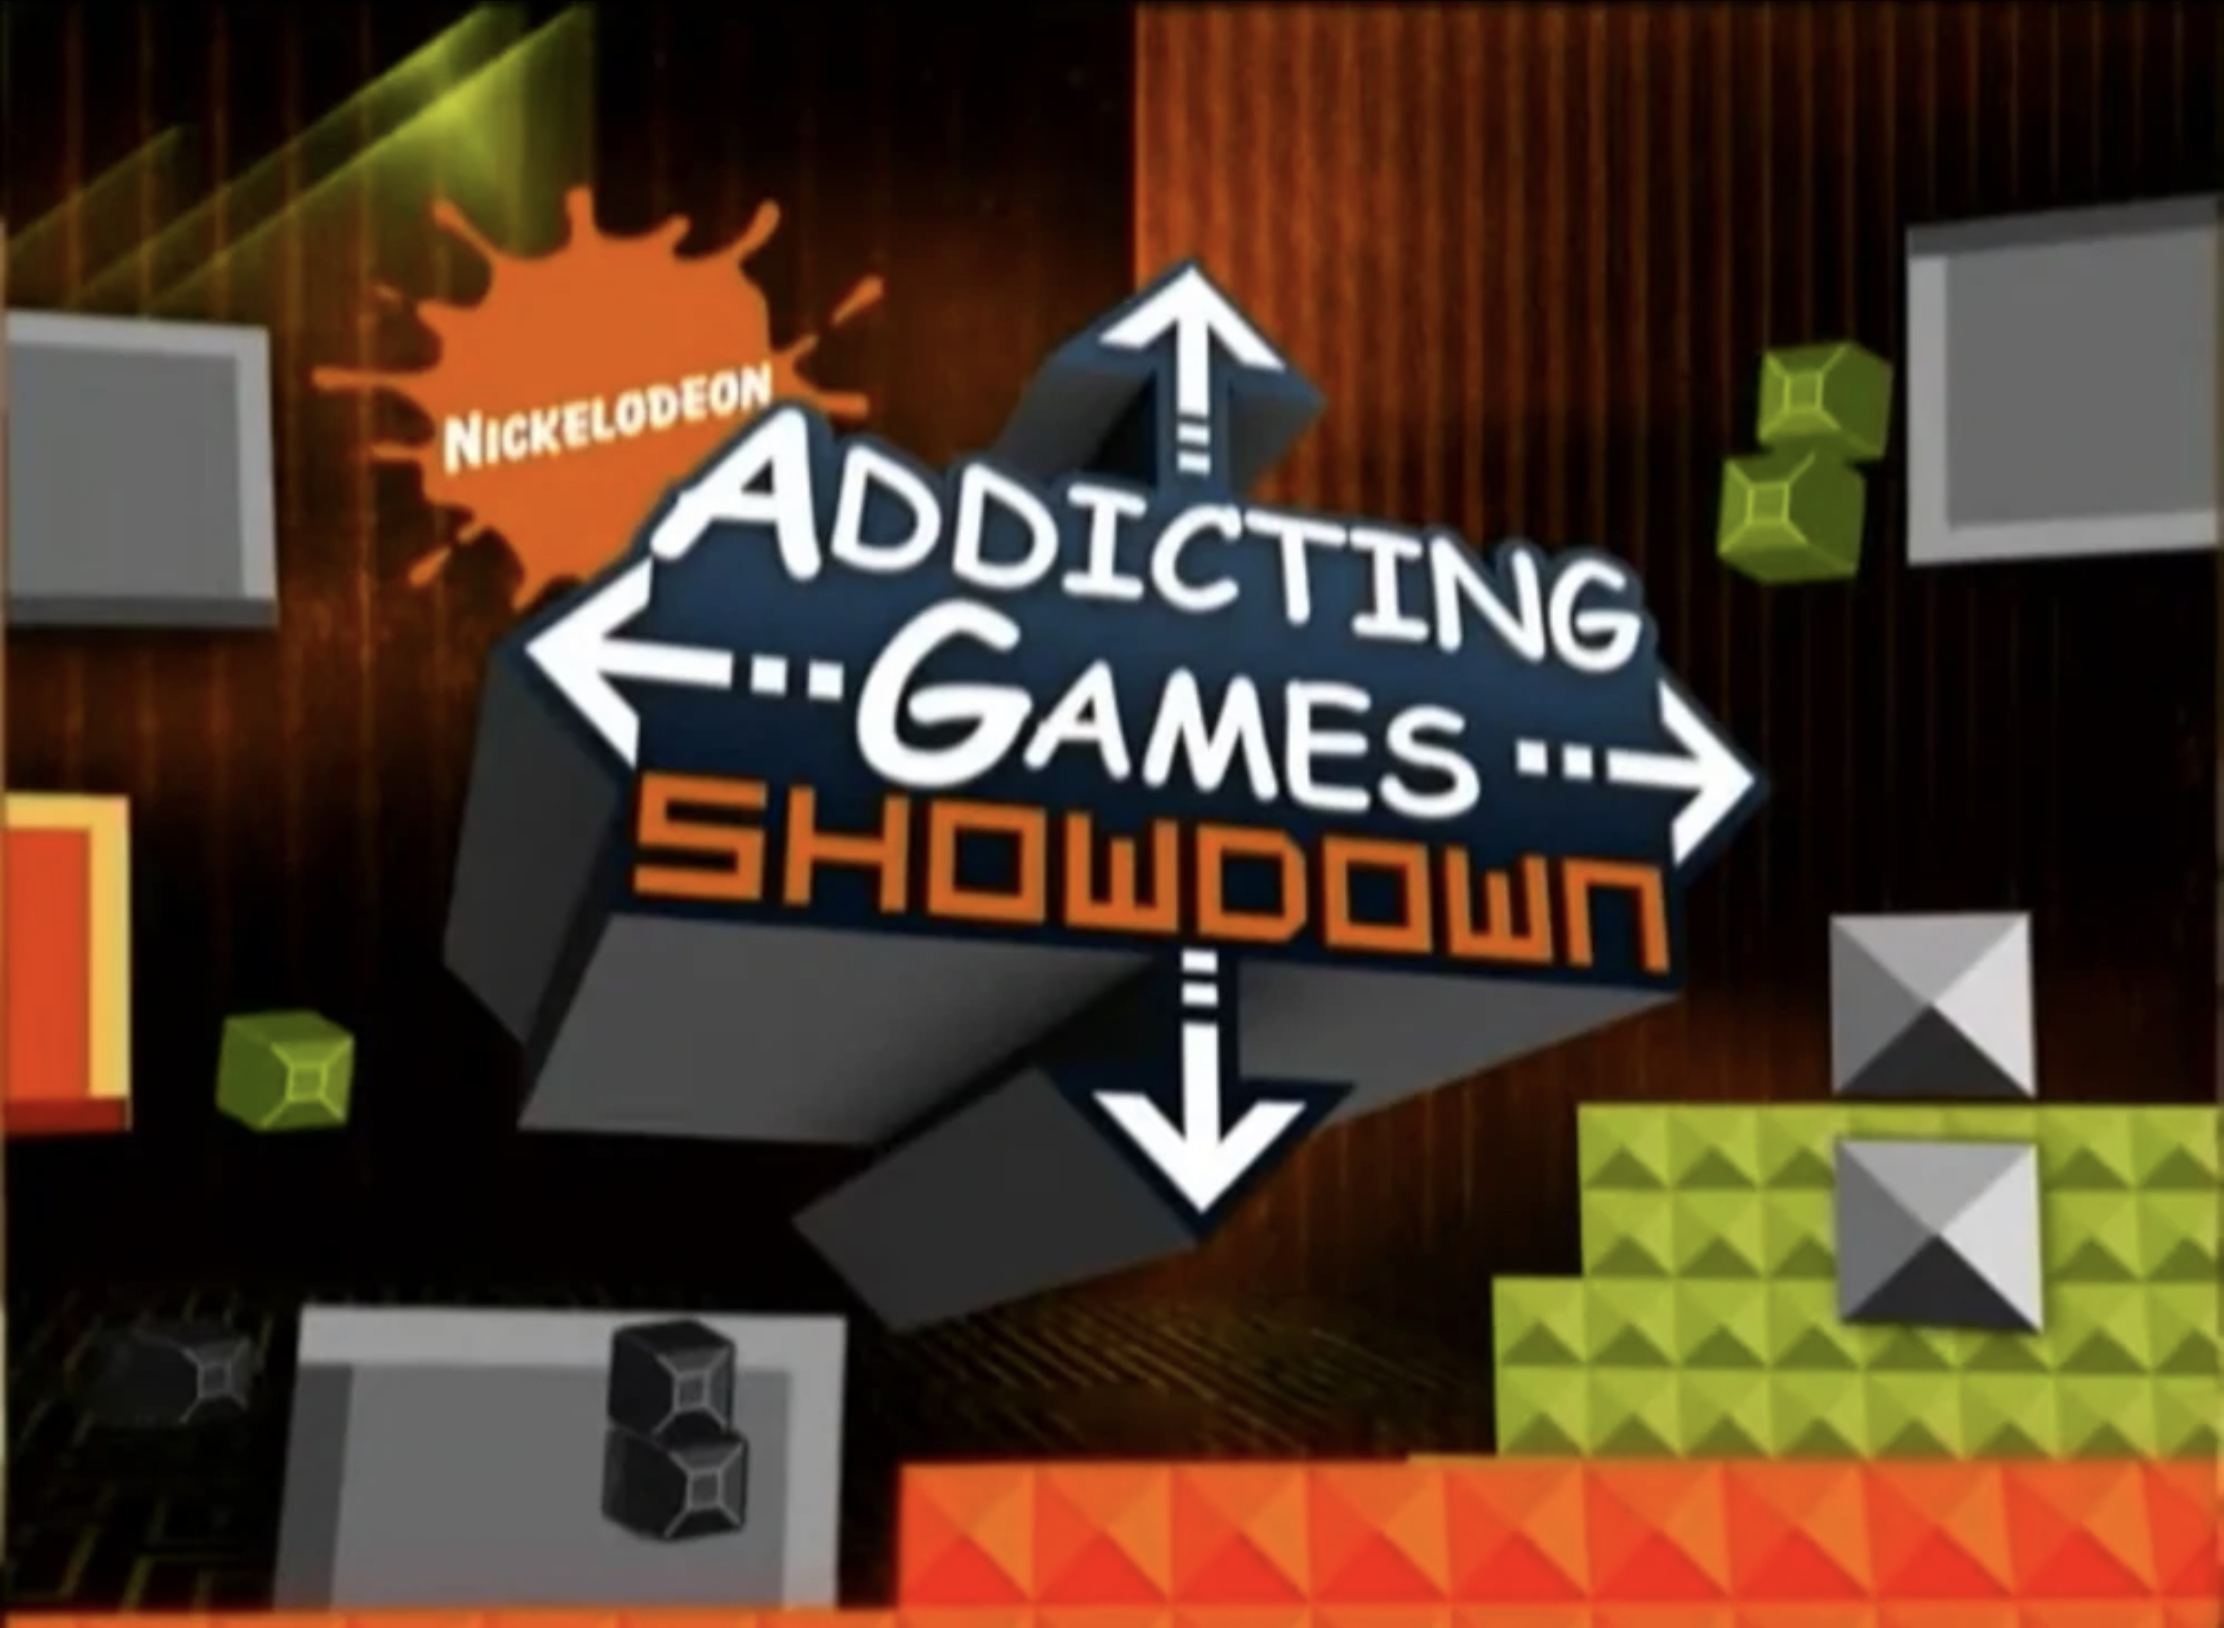 Nickelodeon addicting games showdown logo.jpeg